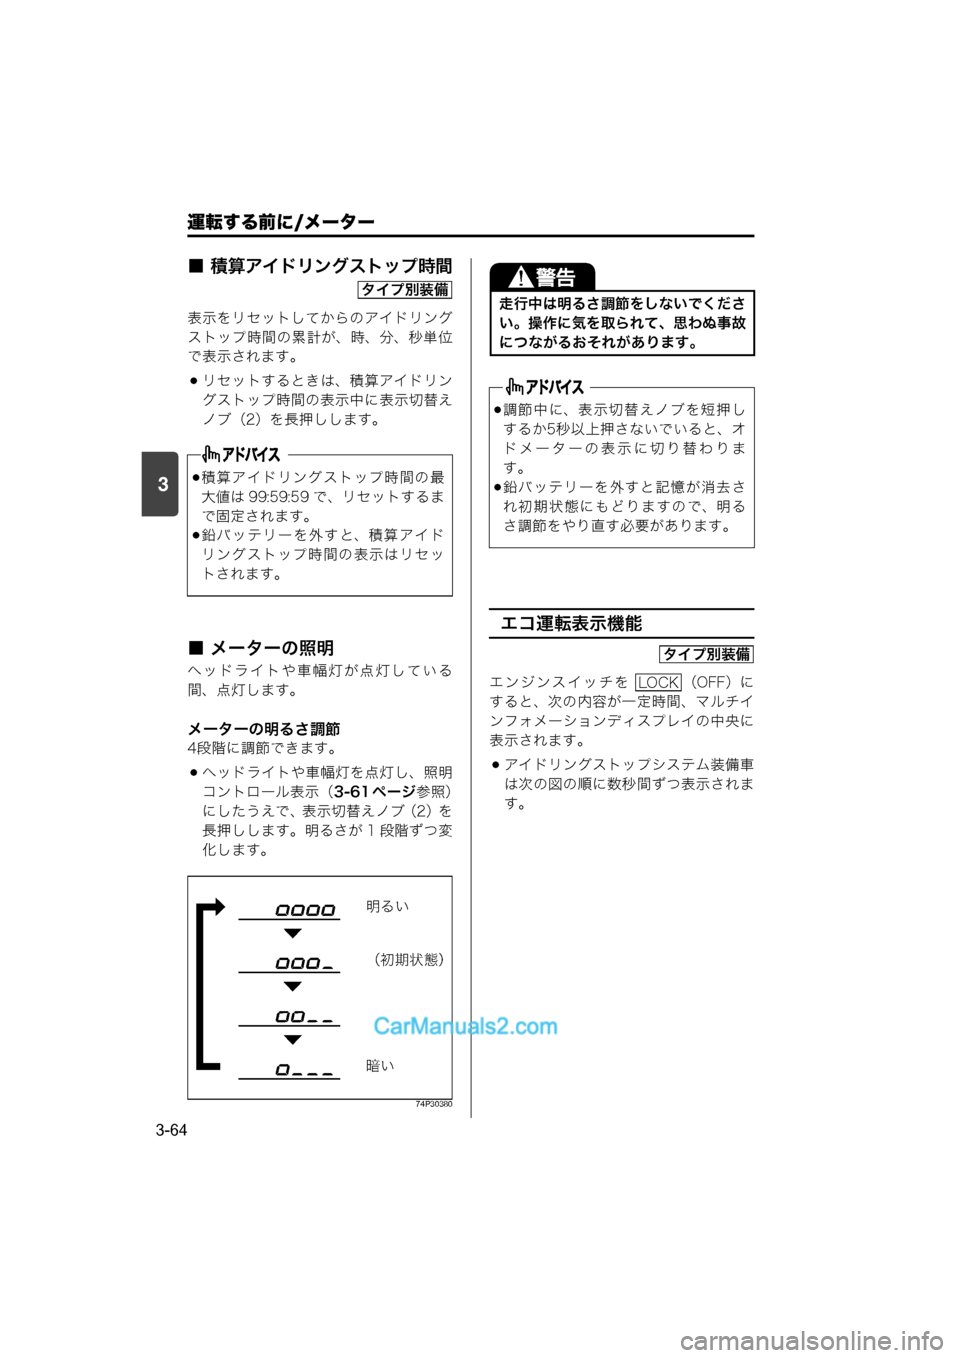 MAZDA MODEL CARROL 2015  取扱説明書 (キャロル) (in Japanese) 運転する前に/メーター
3-64
3
■ 積算アイドリングストップ時間
表示をリセットしてからのアイドリング
ストップ時間の累計が、時、分、秒単位
で�